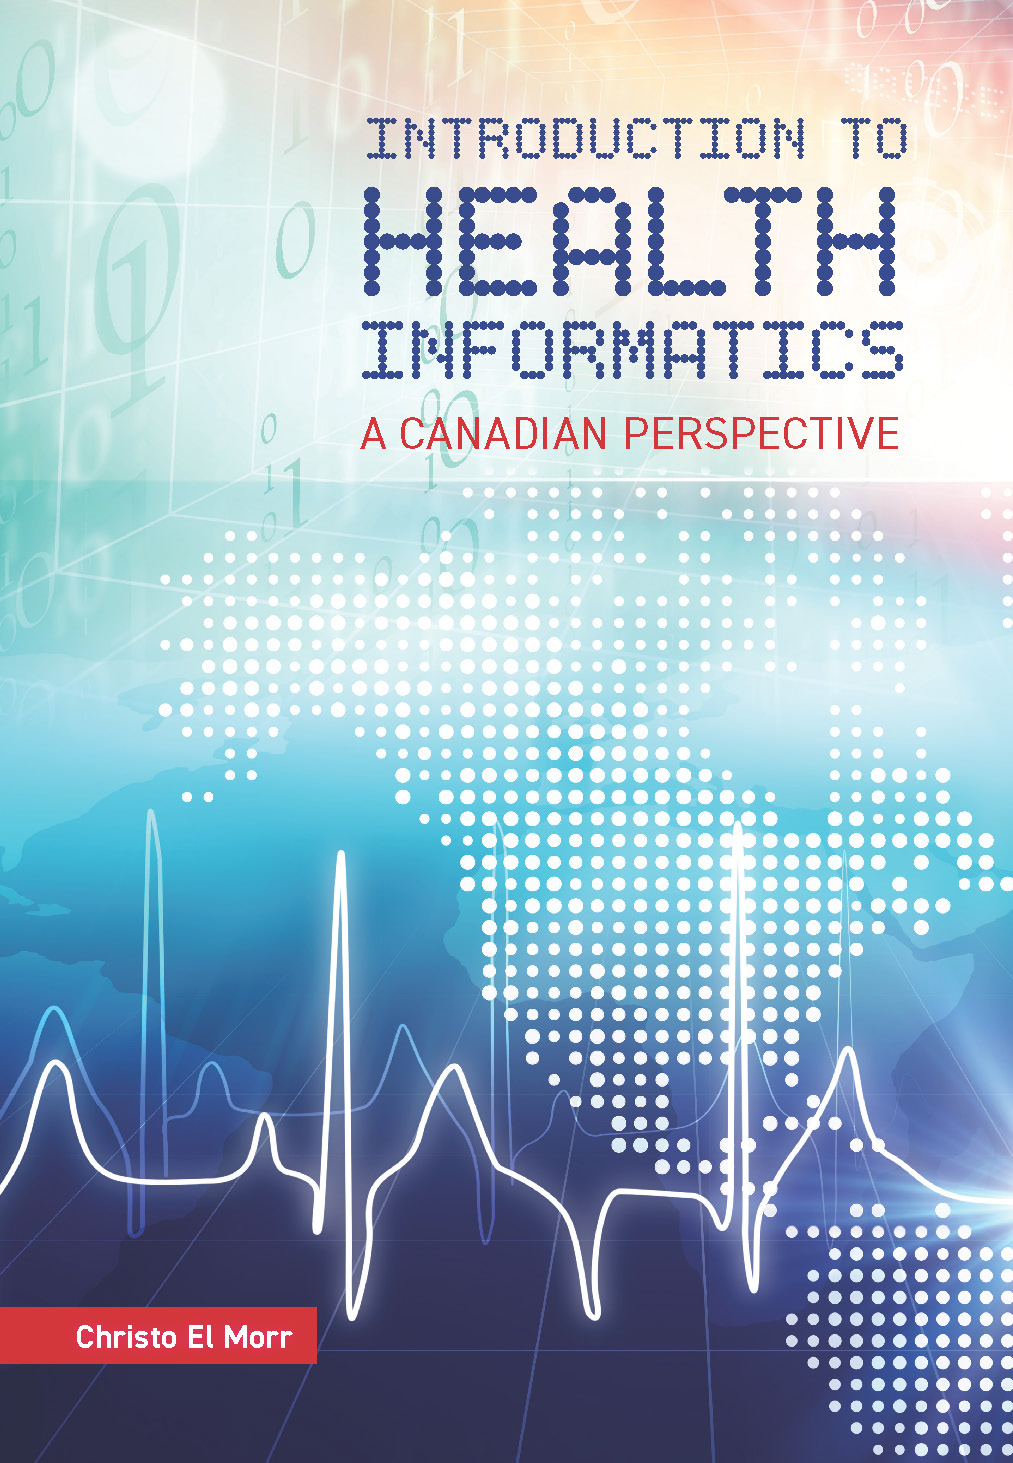 phd in health informatics in canada